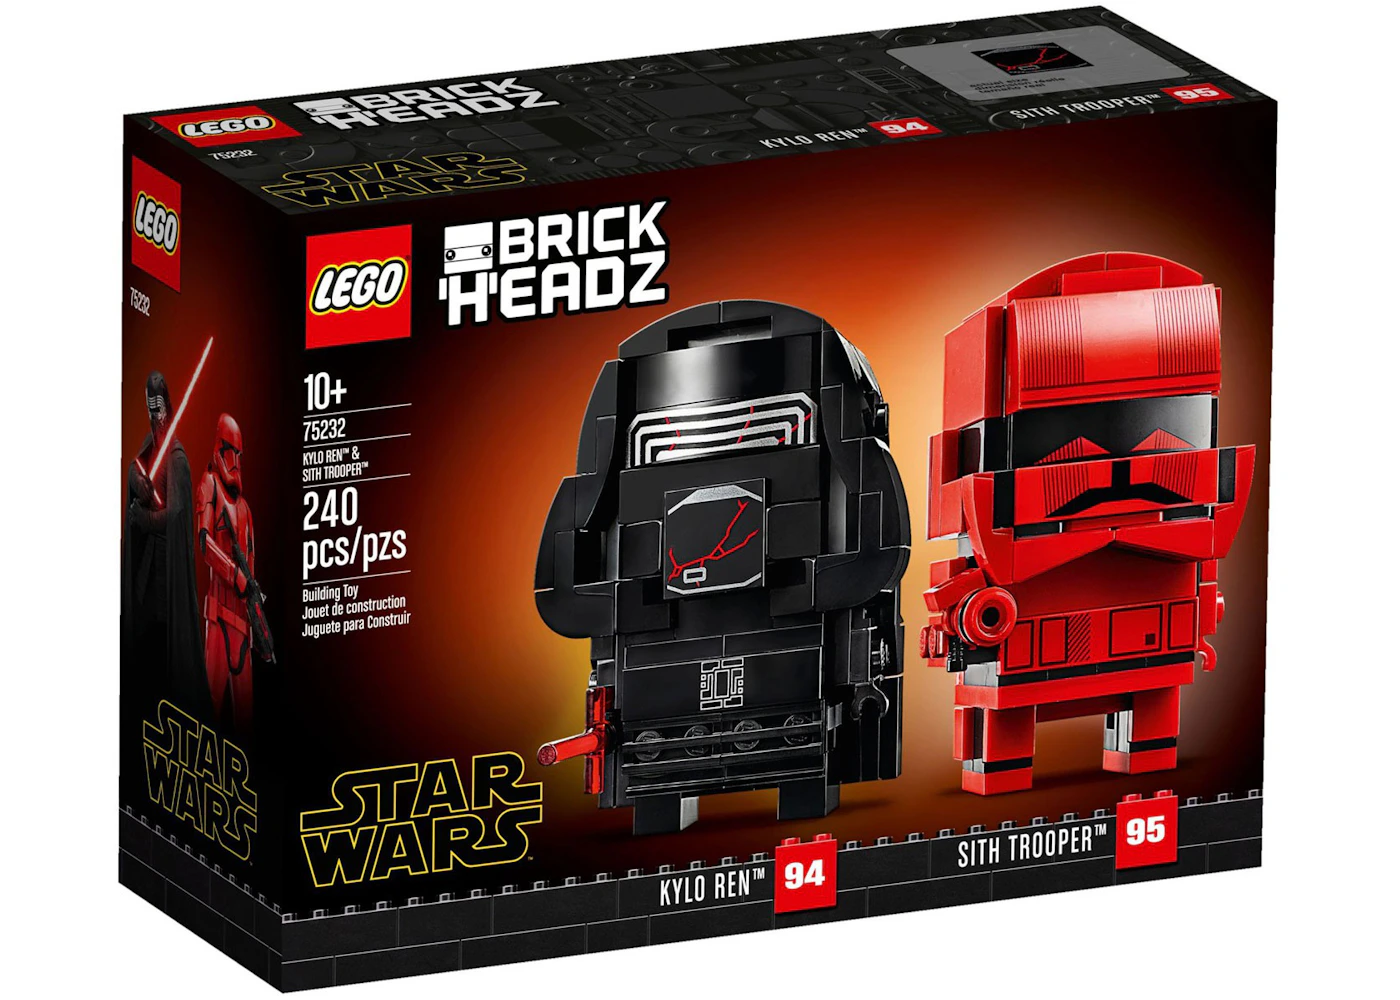 LEGO BrickHeadz Wars Kylo Ren & Sith Trooper Set 75232 US